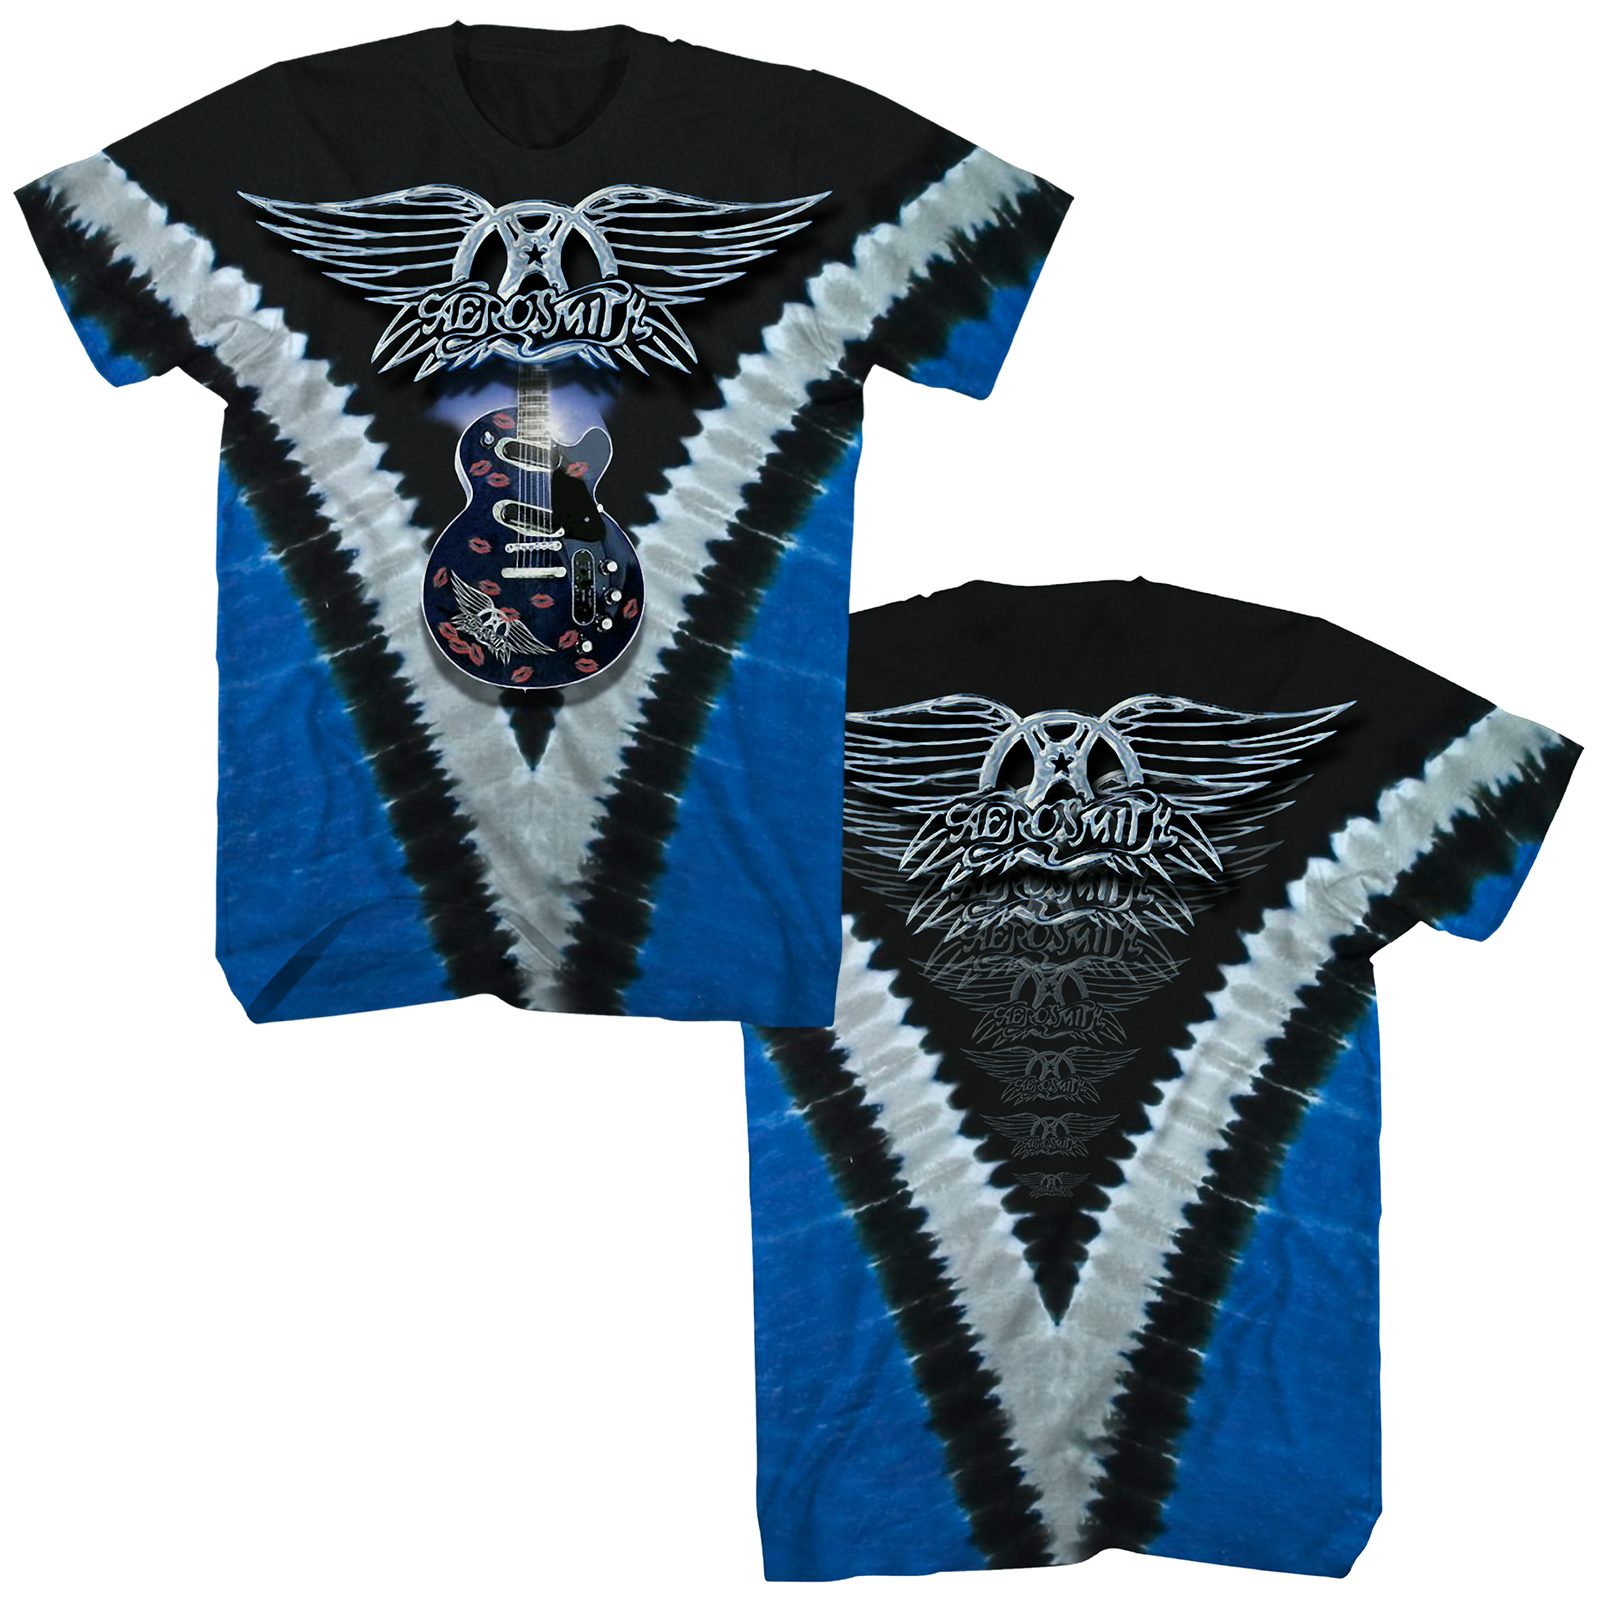 New AEROSMITH Guitar Tie Dye T Shirt